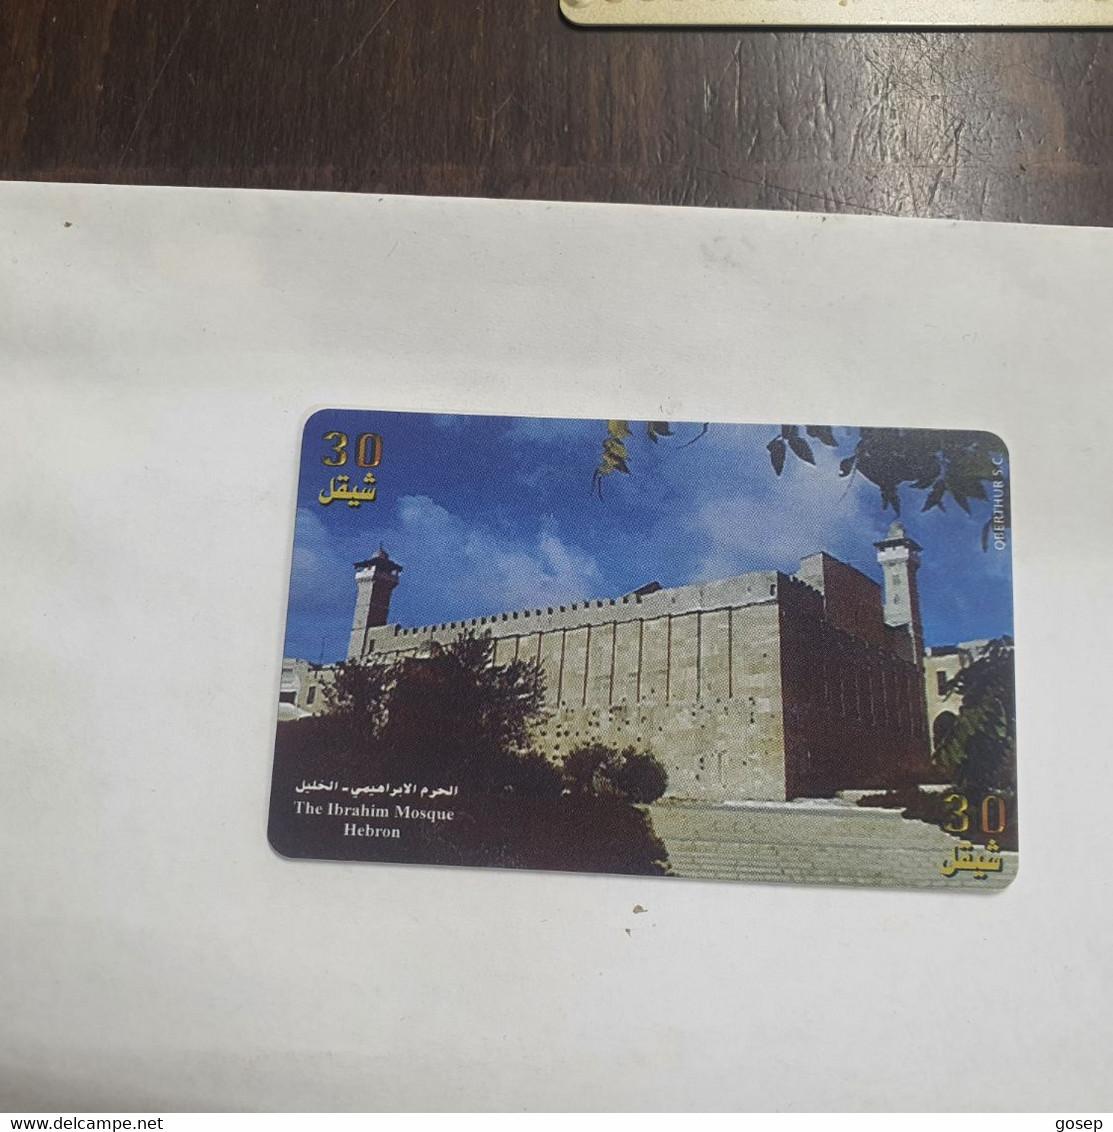 Plastine-(PS-PAL-0006B)-The Ibrahim-Mosque-hebron-(462)-(8/1999)(30₪)(0057-068523)-used Card+1card Prepiad Free - Palästina